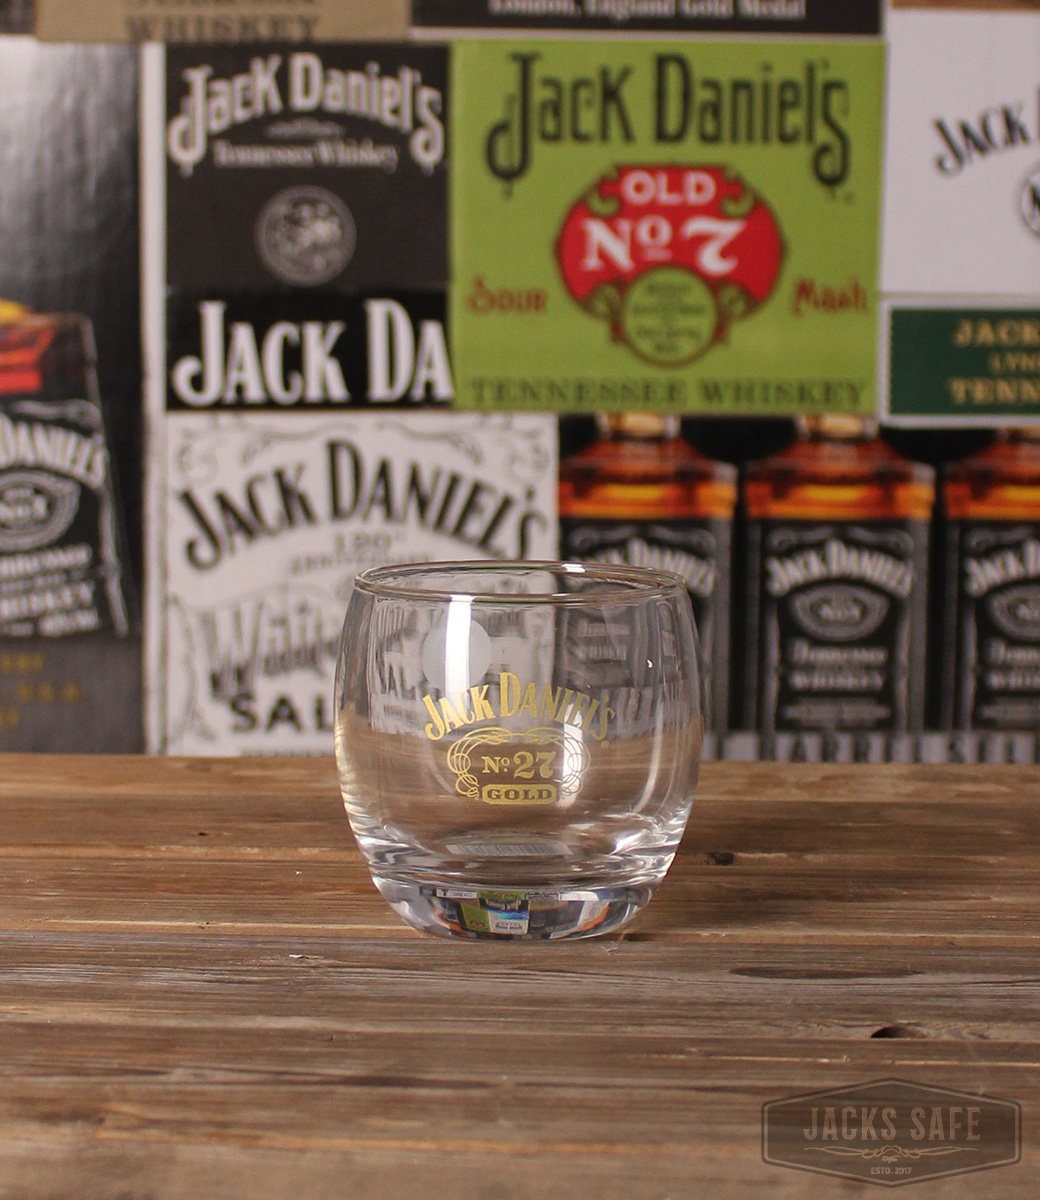 JACK DANIEL'S - Glassware - Glass - Gold Nº 27 -  Gold